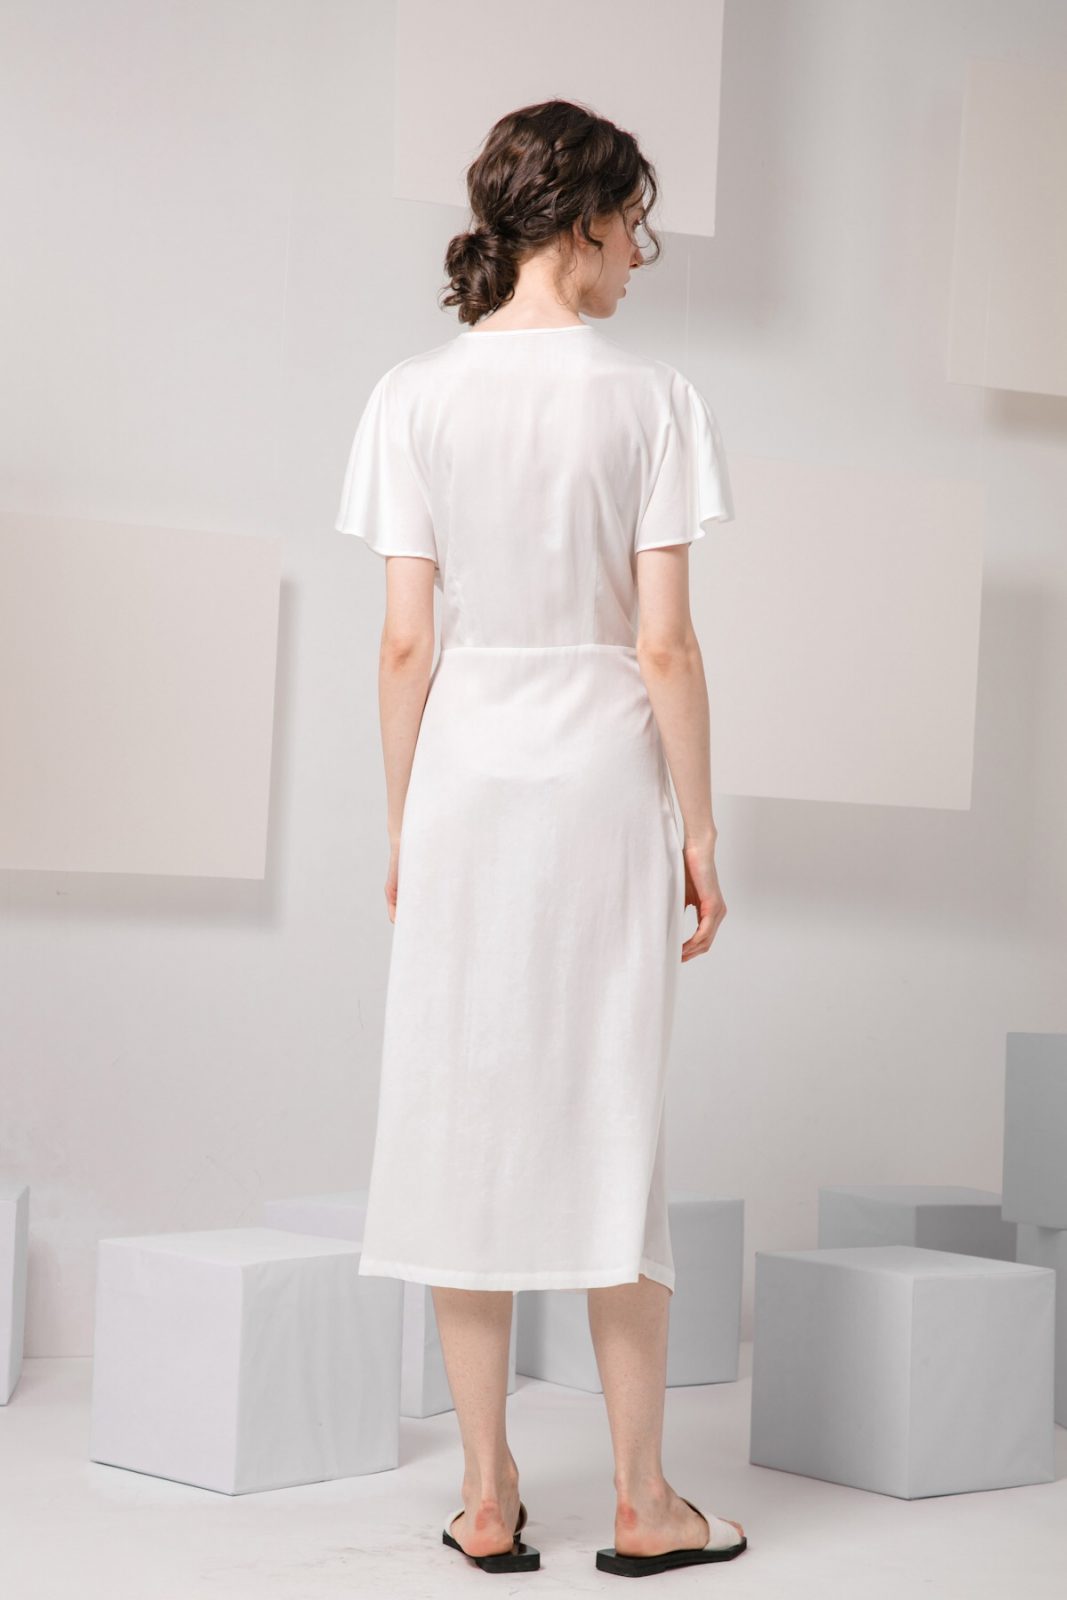 SKYE modern minimalist women clothing fashion Calla Dress white 2